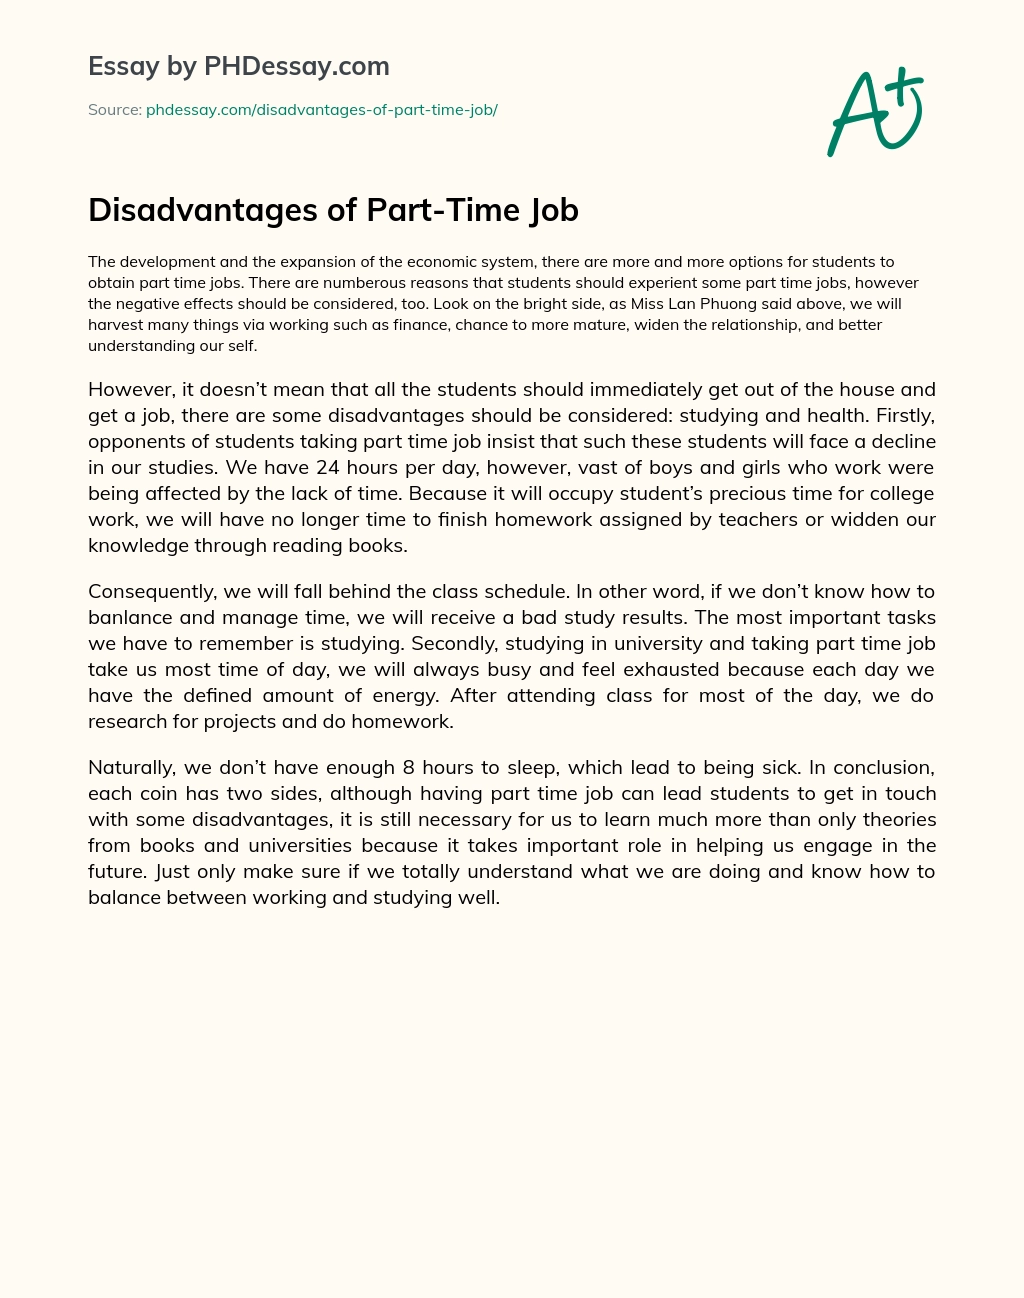 Disadvantages of Part-Time Job essay